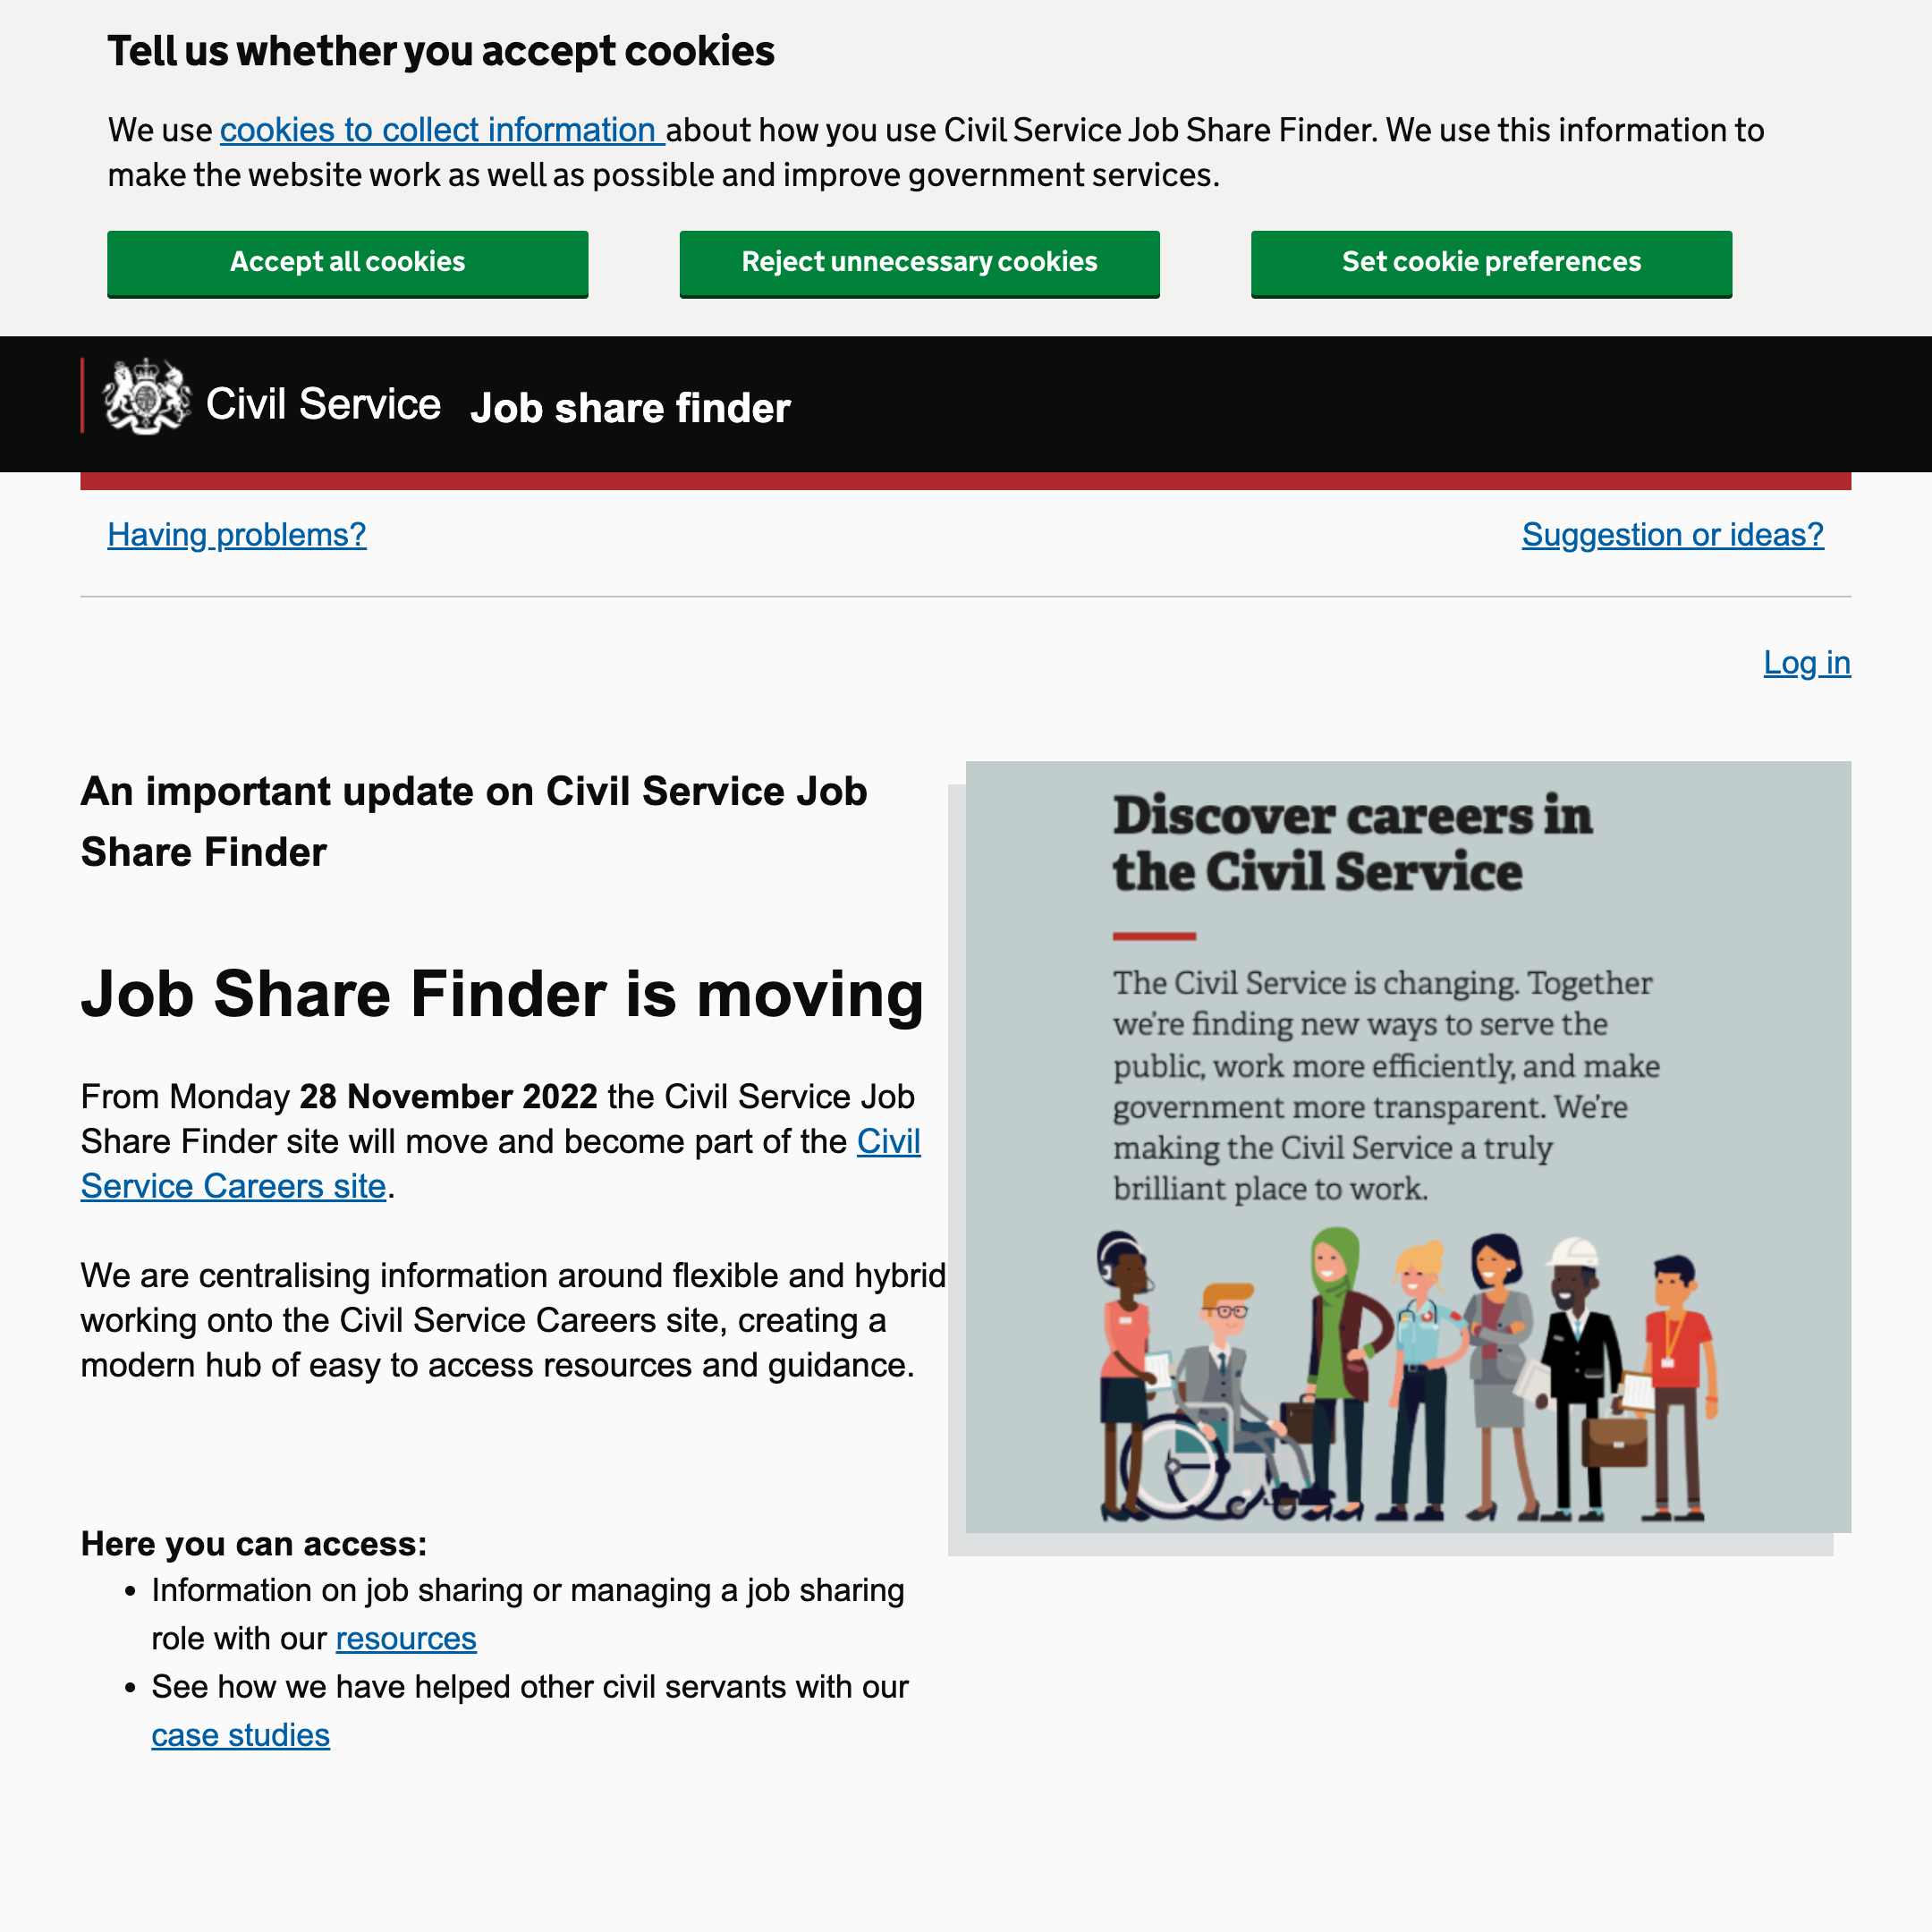 Civil Service Job share finder